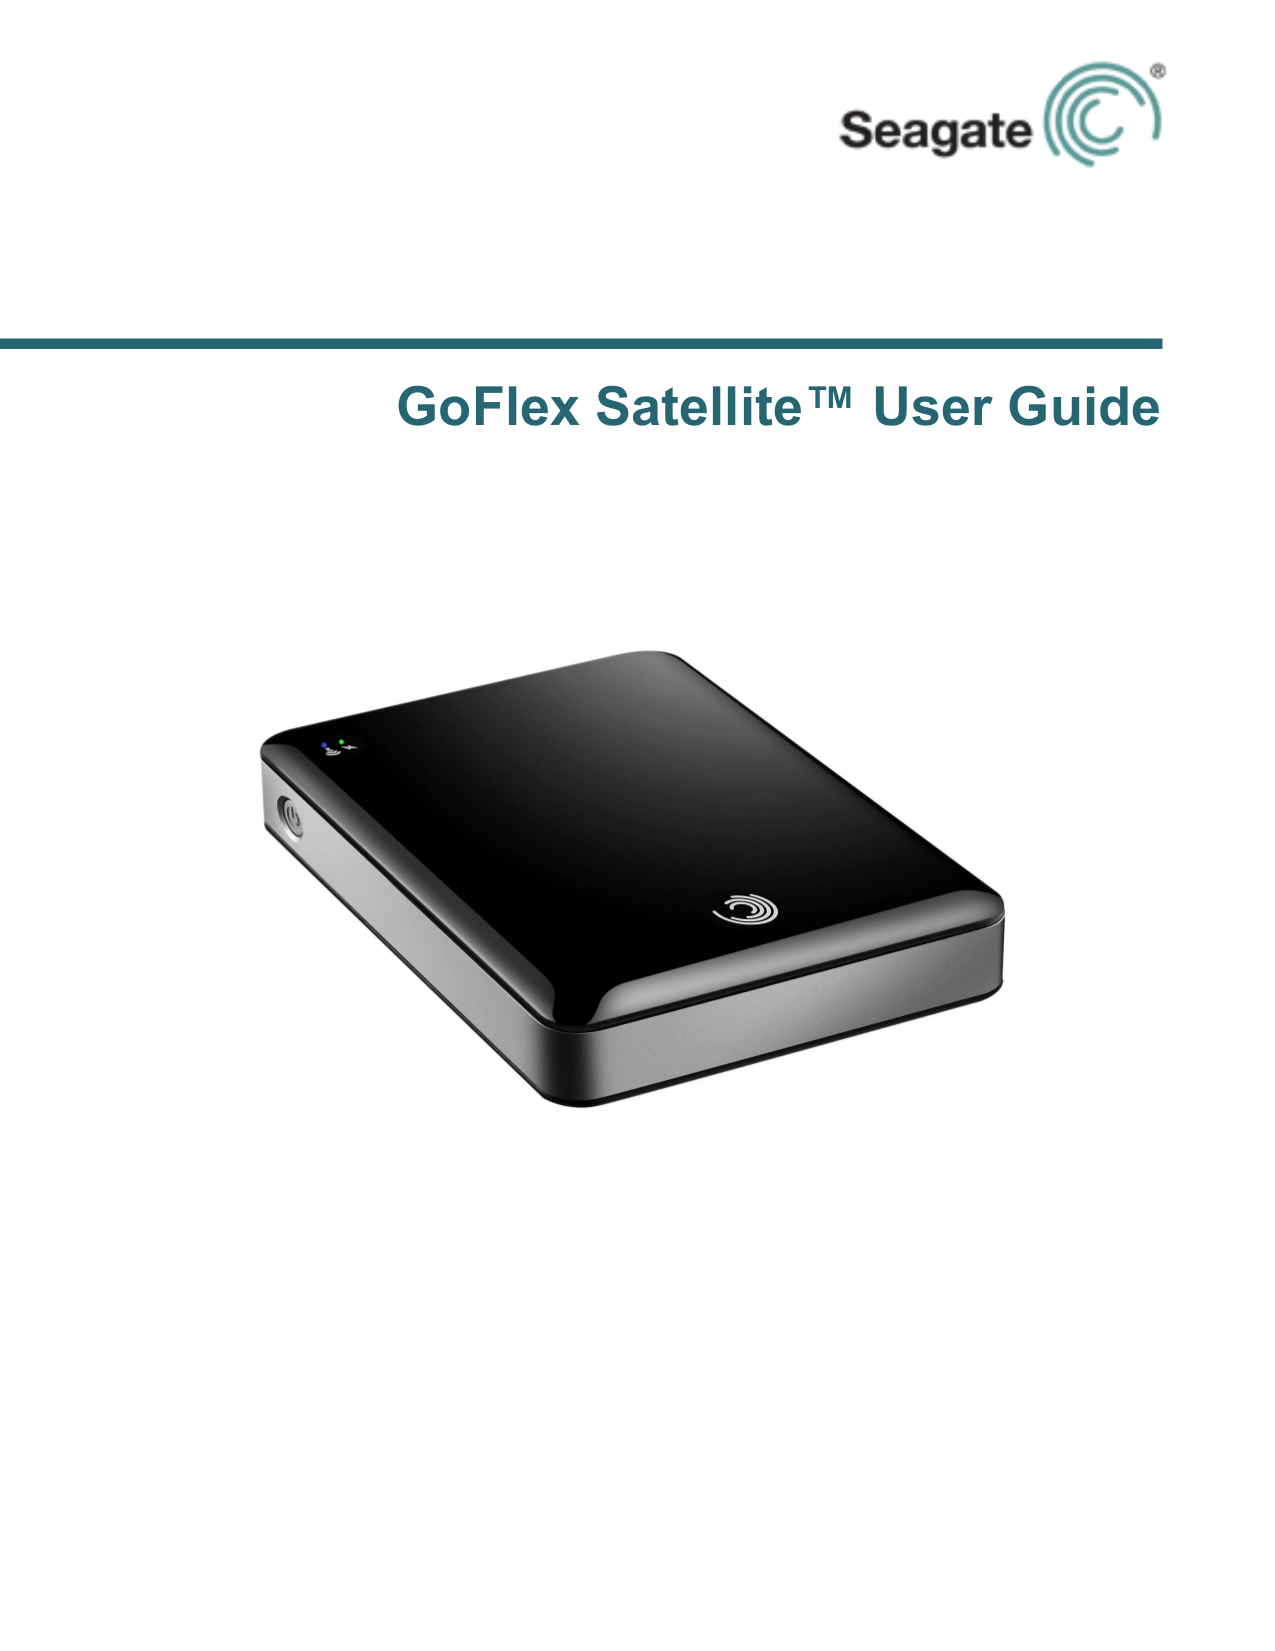 Download Free Pdf For Seagate Freeagent Goflex 1tb Storage Manual